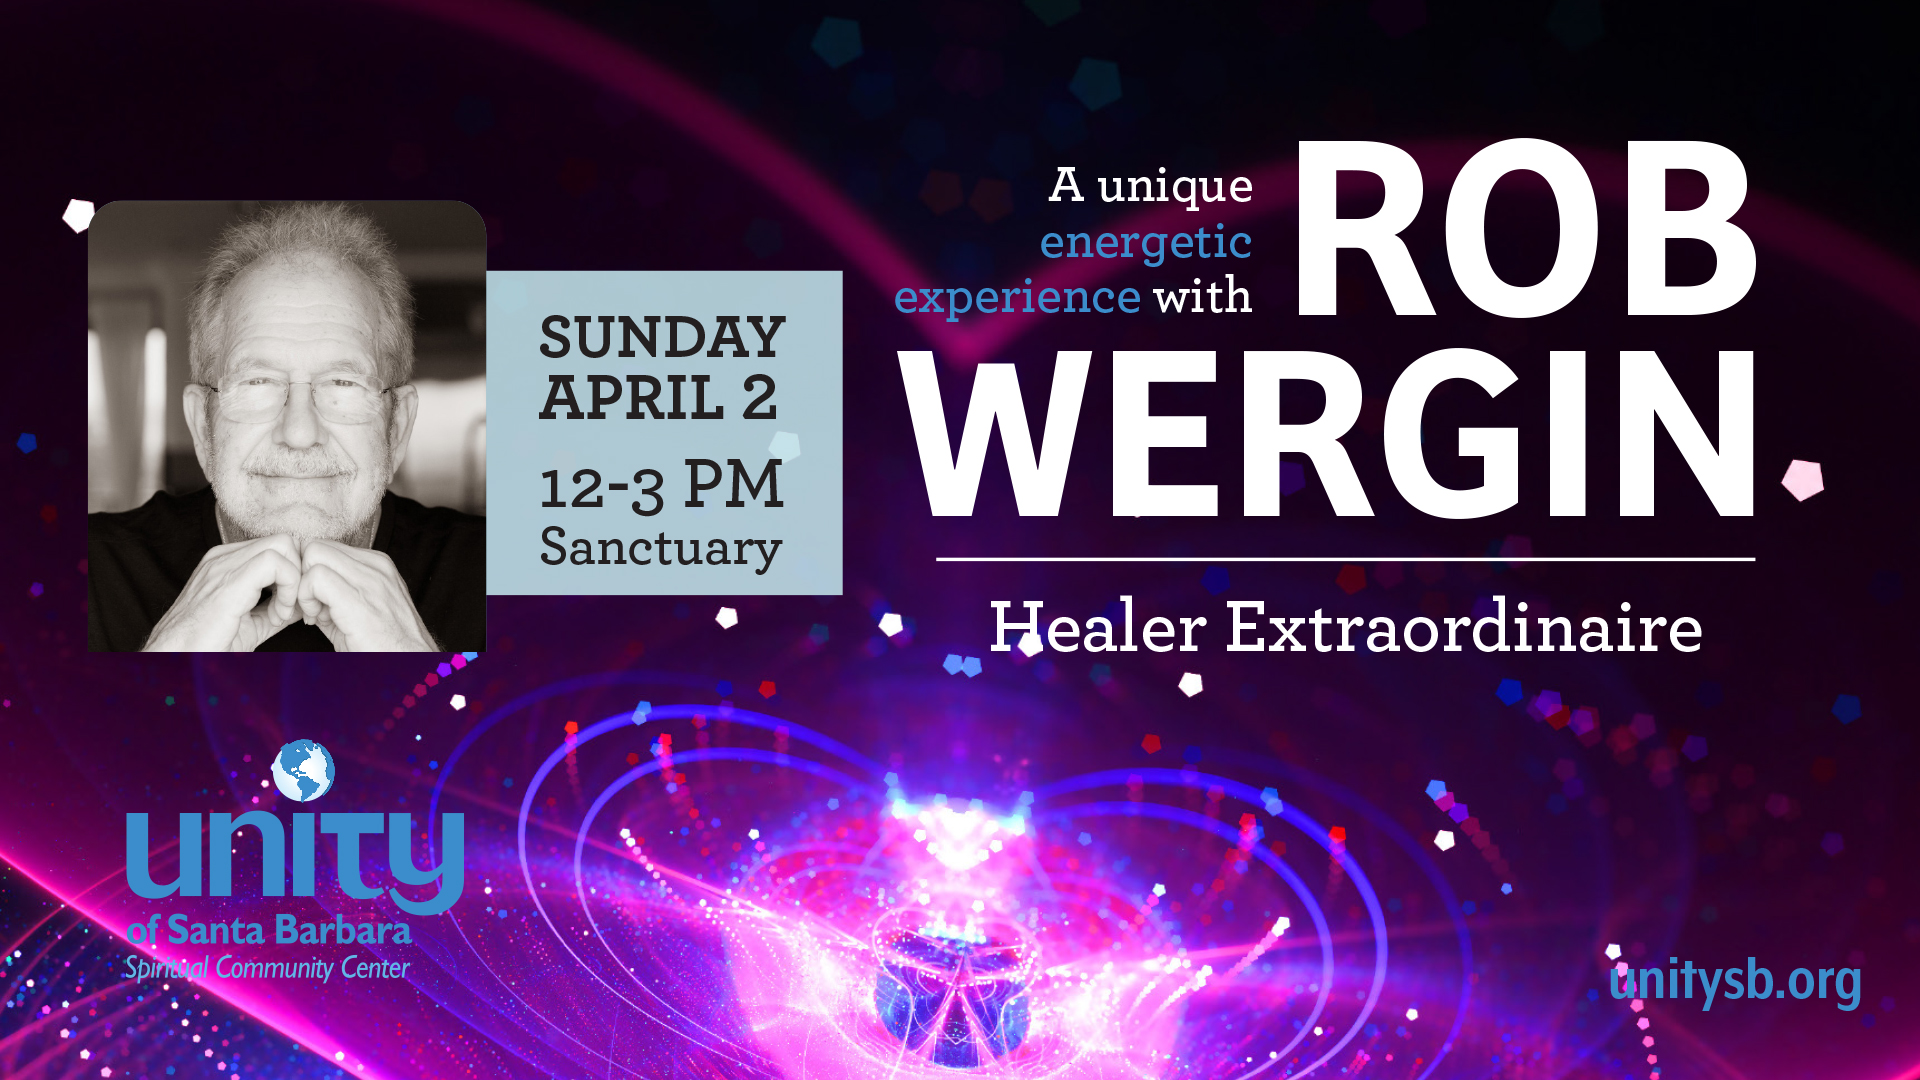 Rob Wergin: Healer Extraordinaire